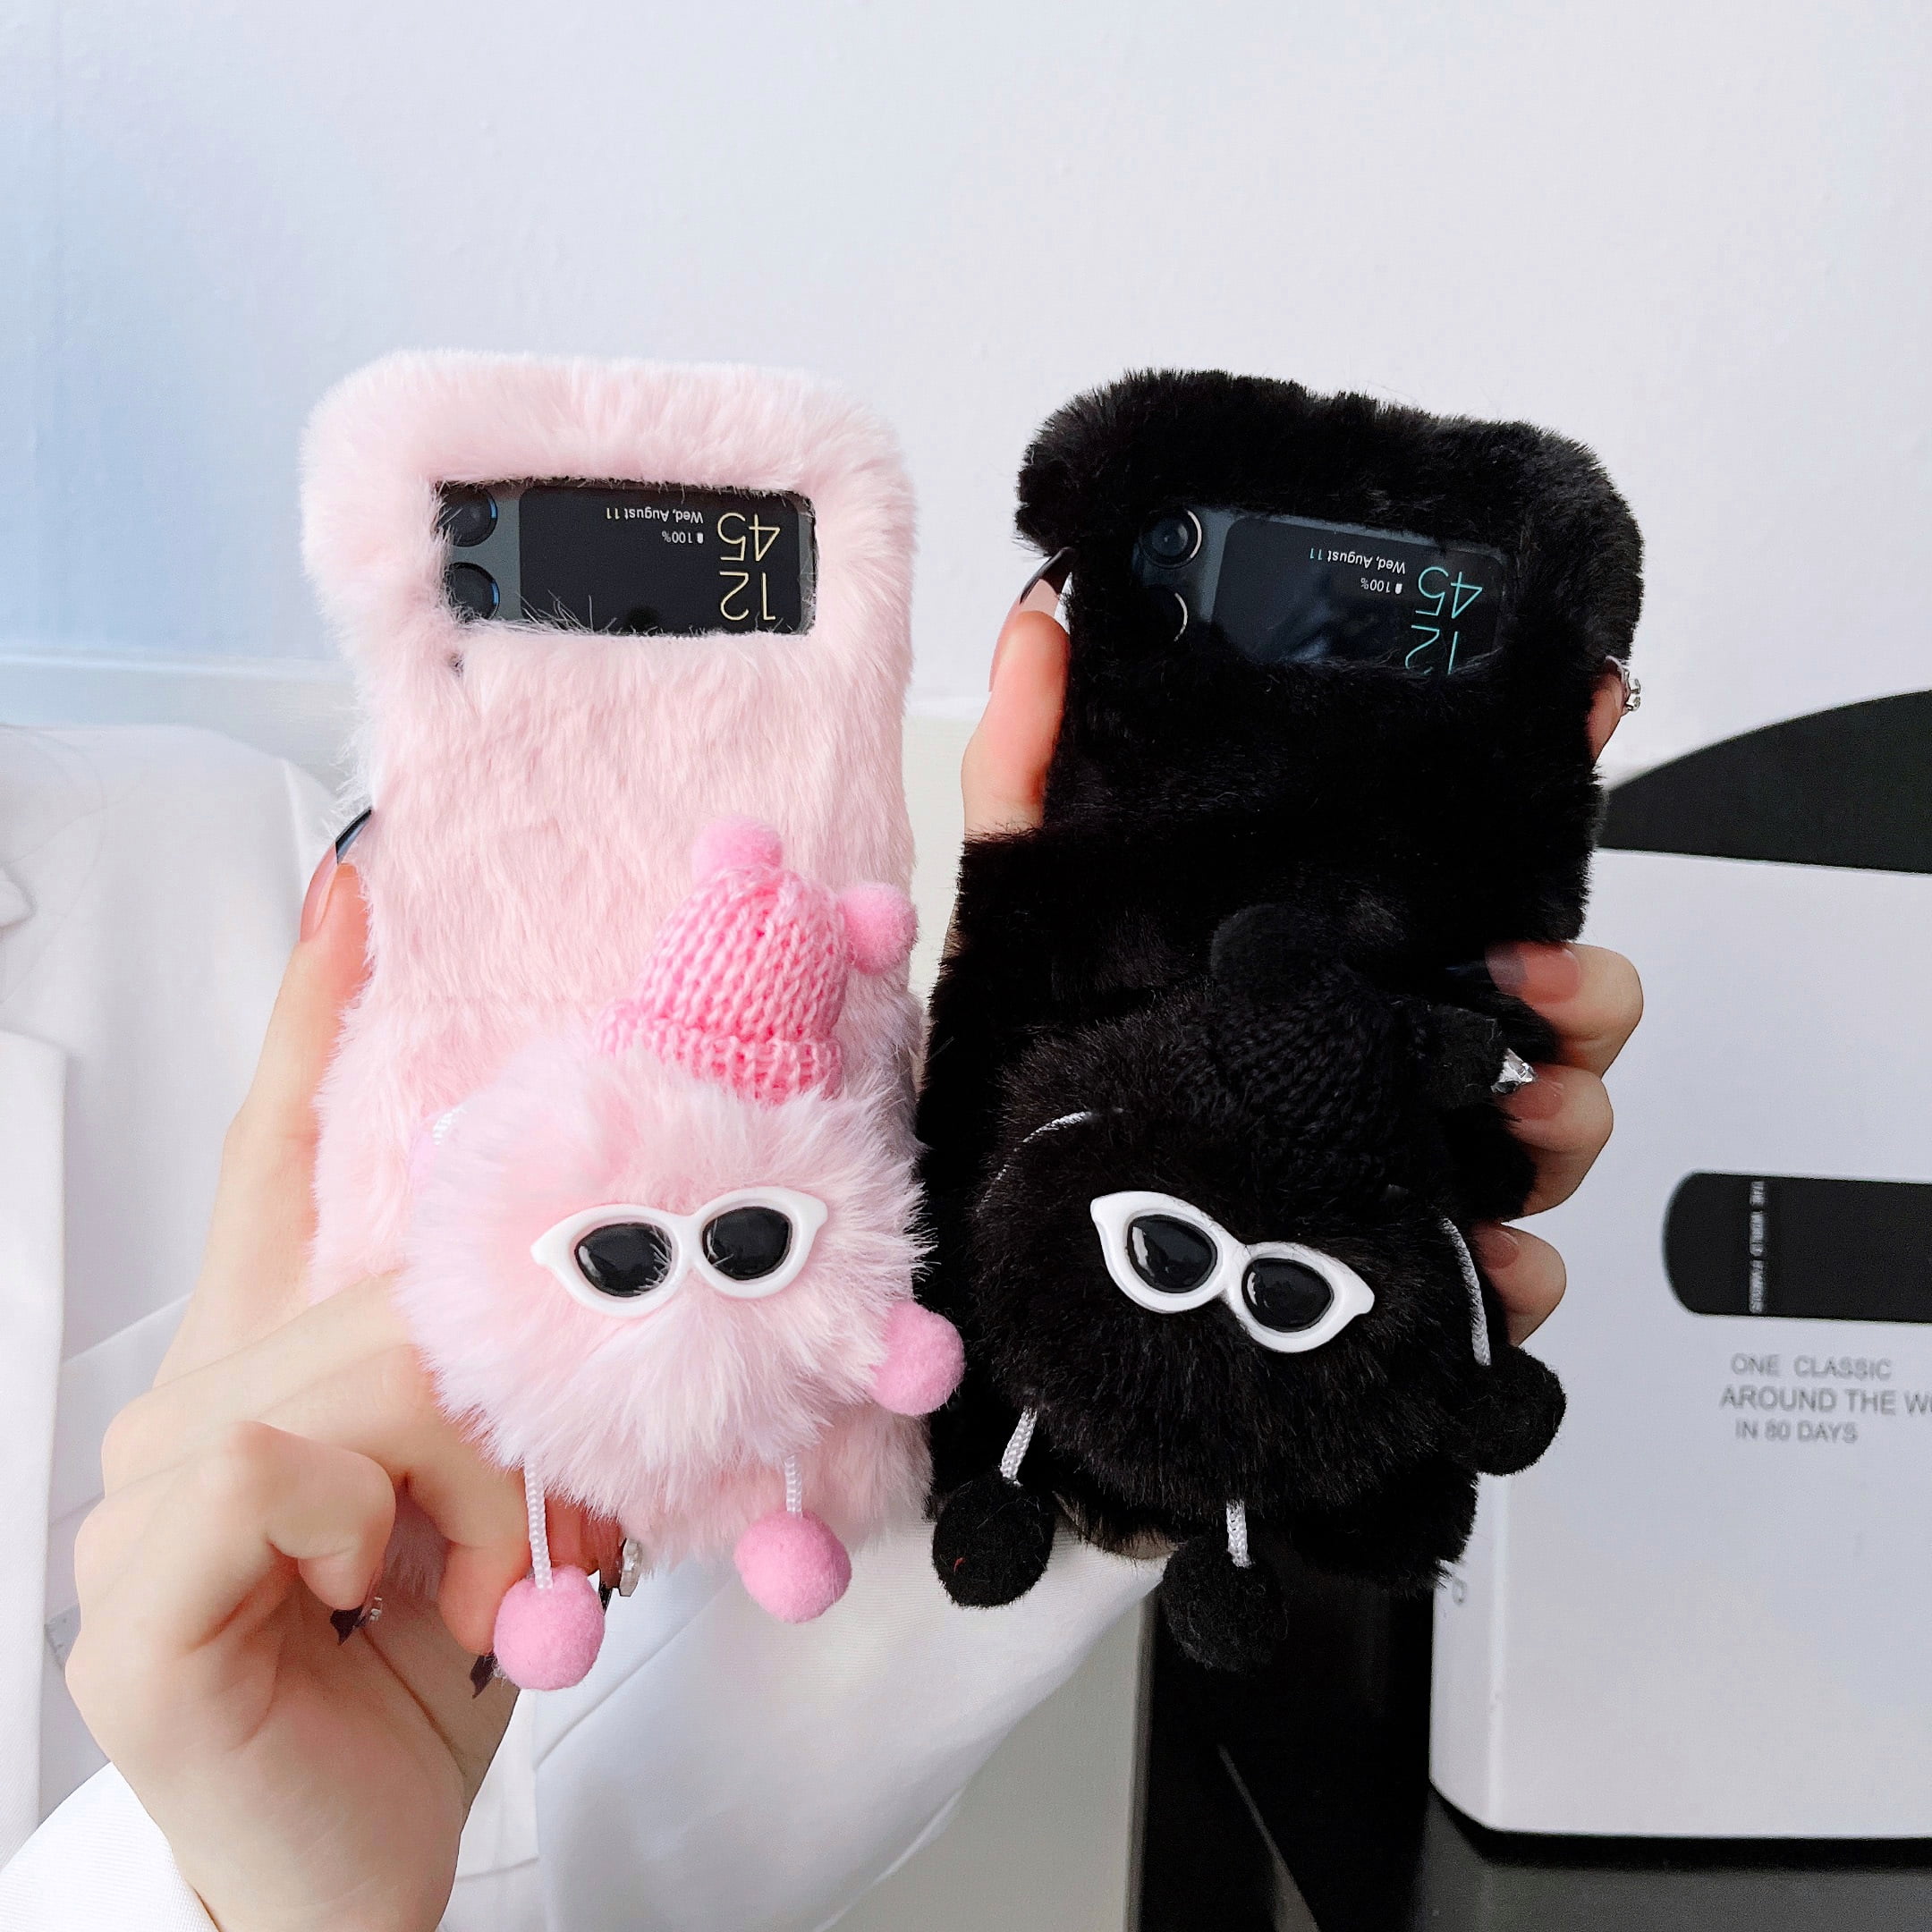 [2 Pack] Cute Case for Samsung Galaxy Z Flip 4 5G Case, Cartoon Kawaii  Aesthetic Cool Phone Cases Girly for Girls Boys Kids Women Clear Soft TPU